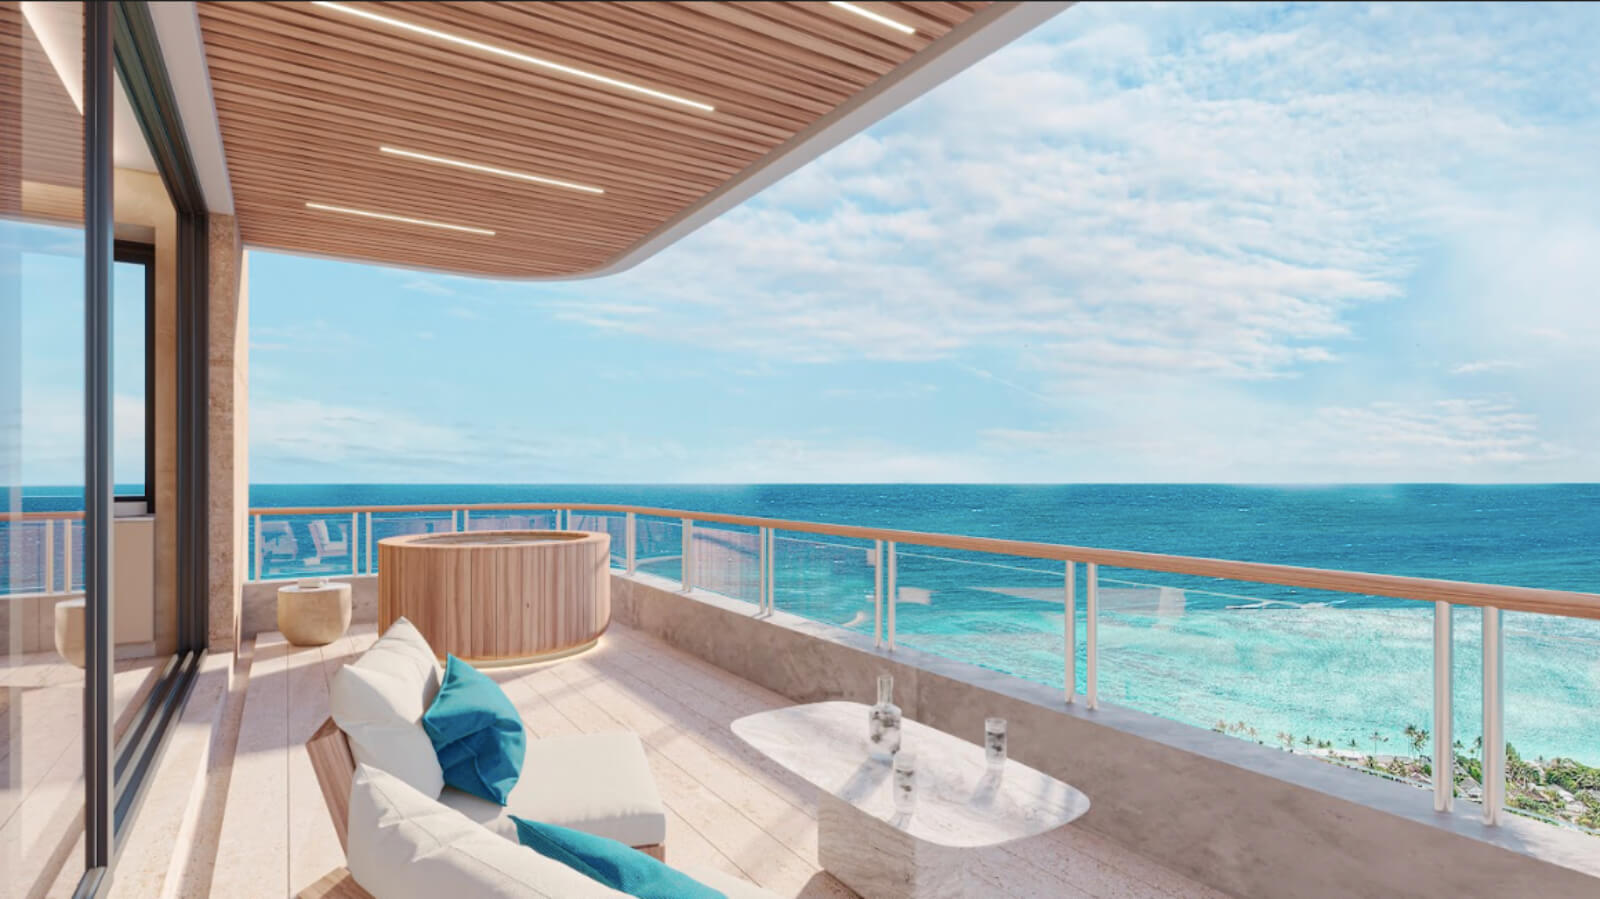 Luxury condo with ocean view, beach access, pet-friendly, for sale in Puerto Morelos.